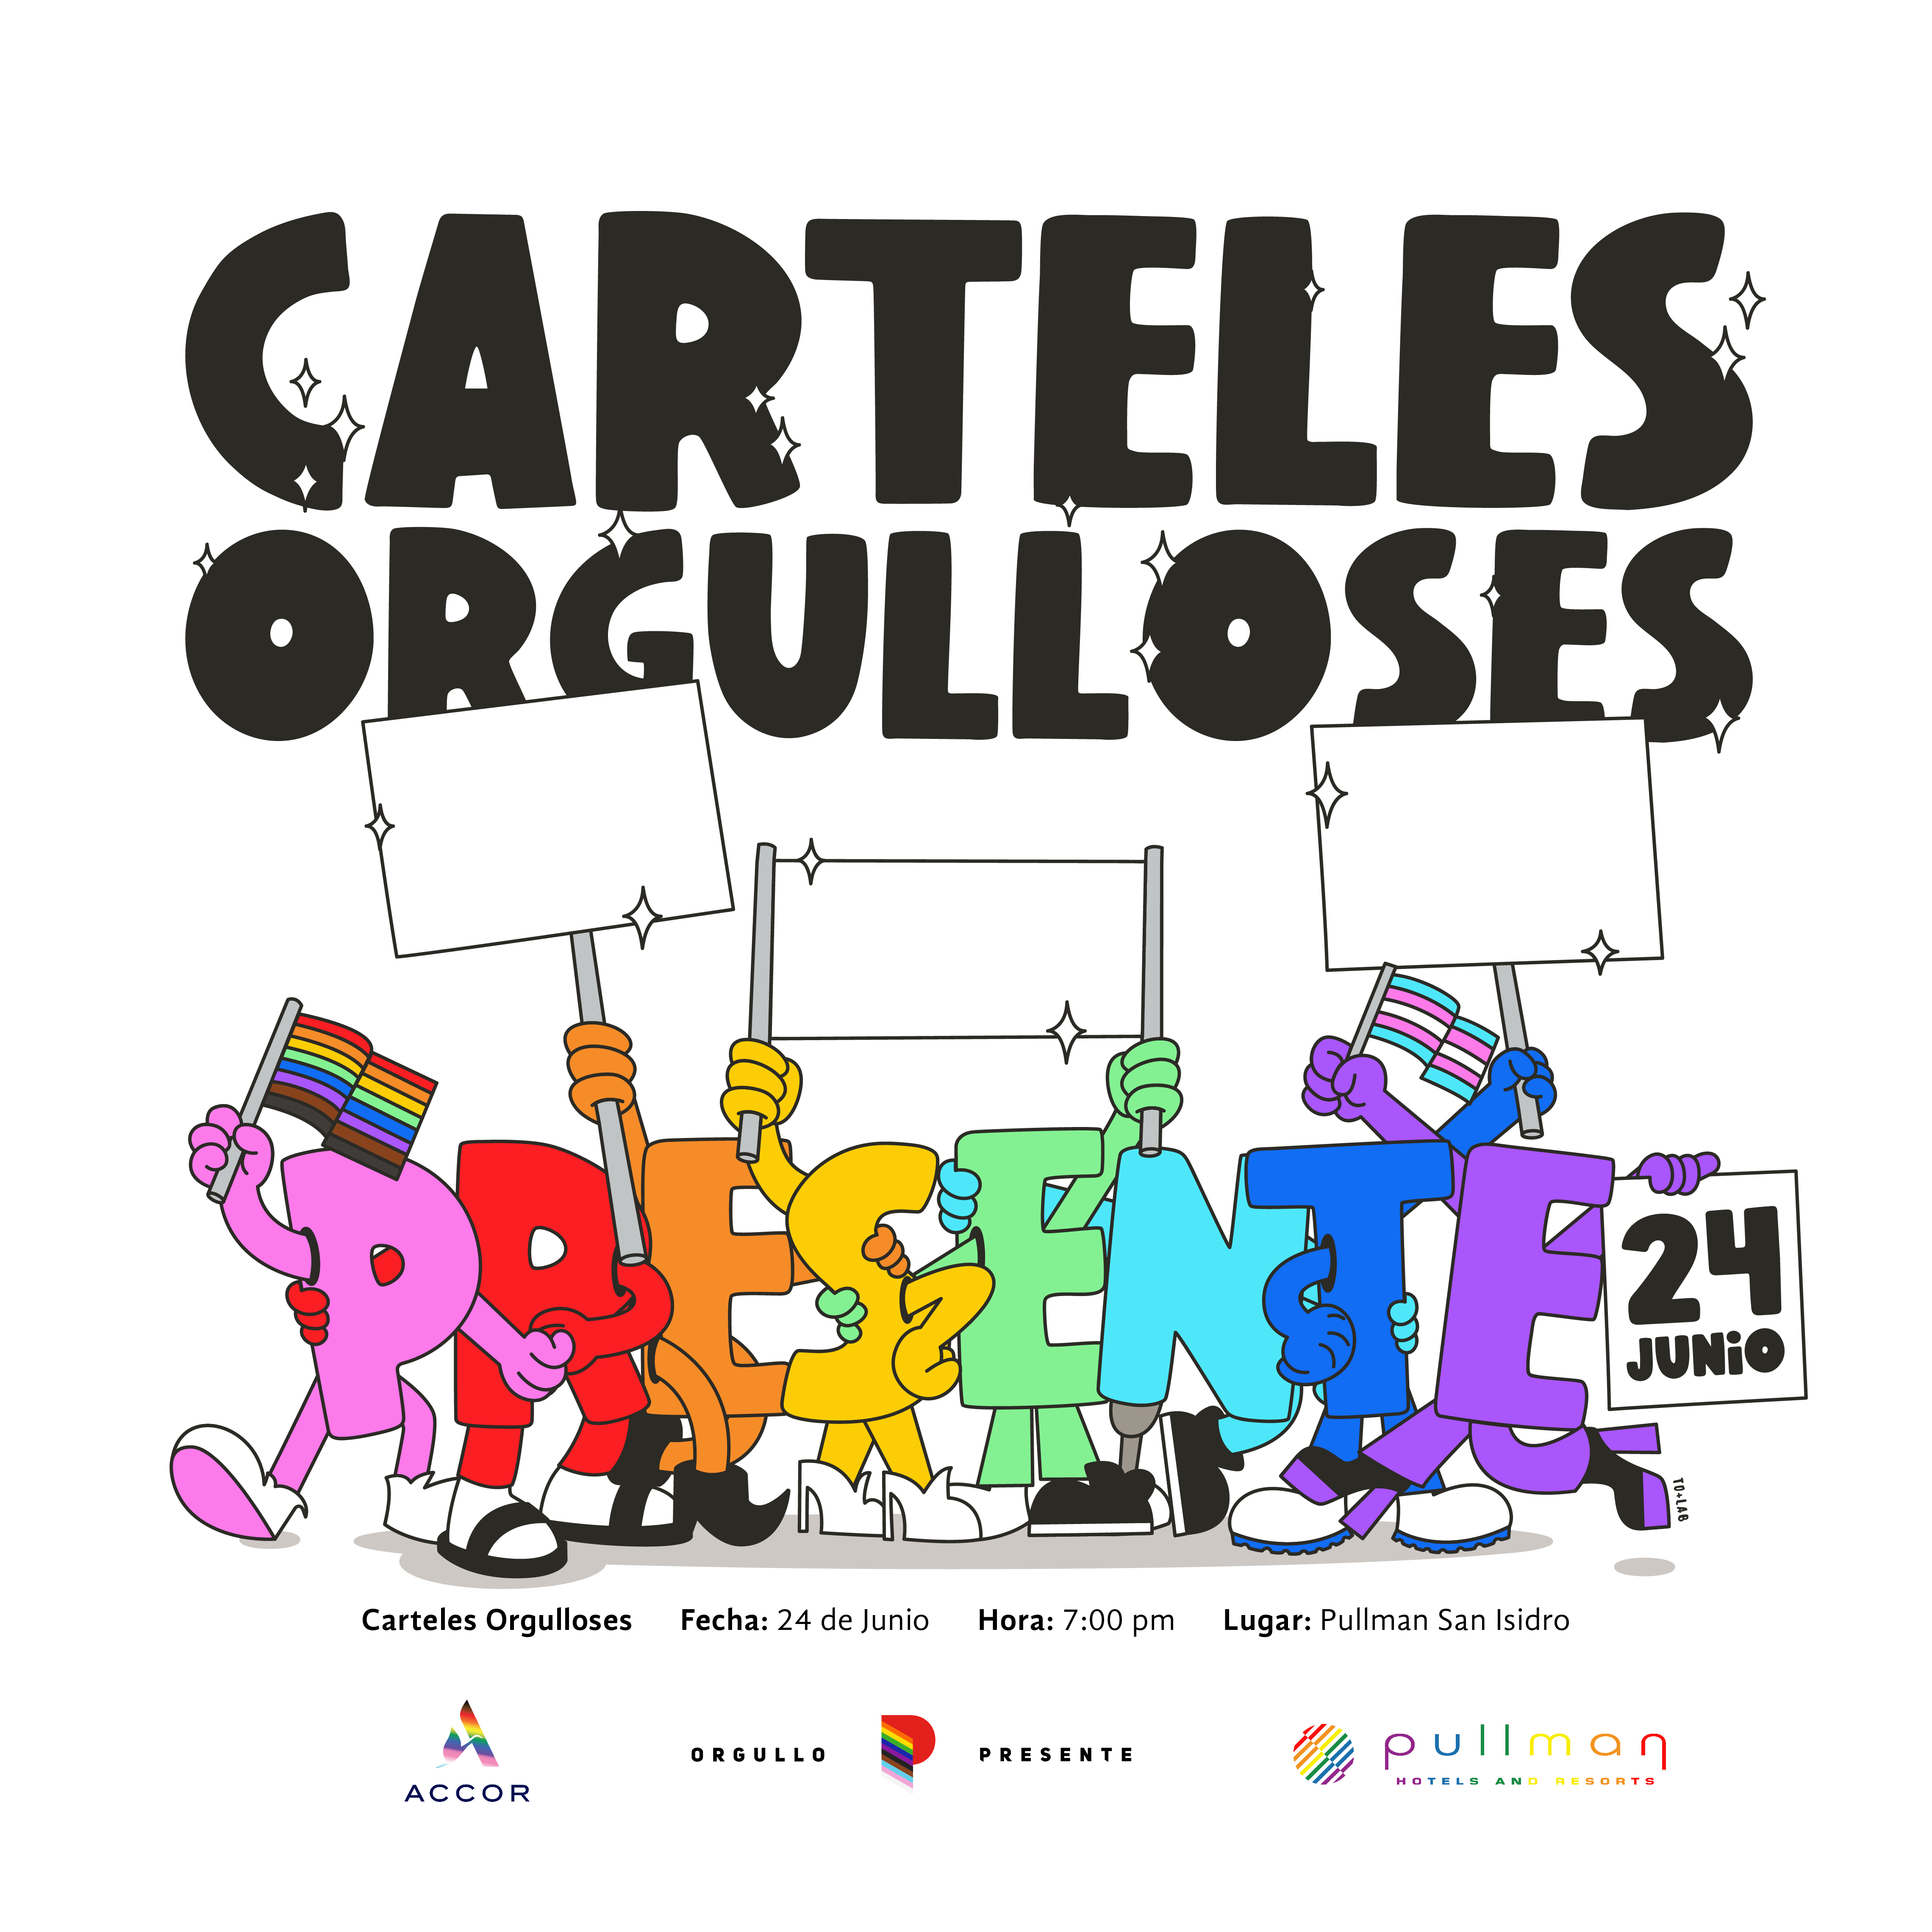 OPSP_CARTELES_ORGULLOSES